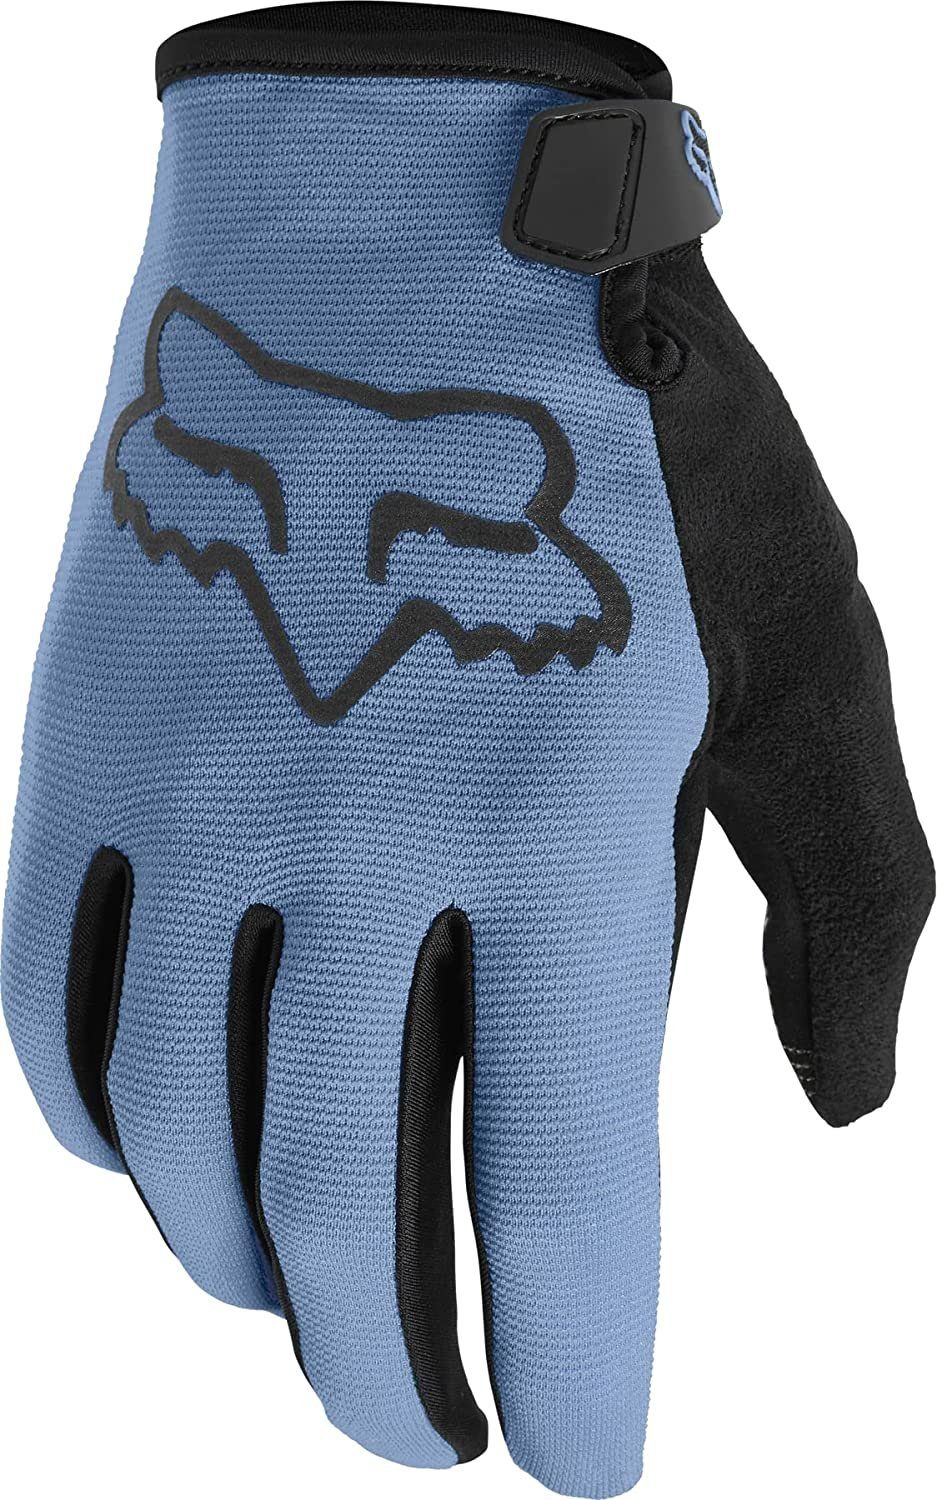 Handschuhe Motorradhandschuhe Racing Ranger Blau Fox Fox Glove Staubiges